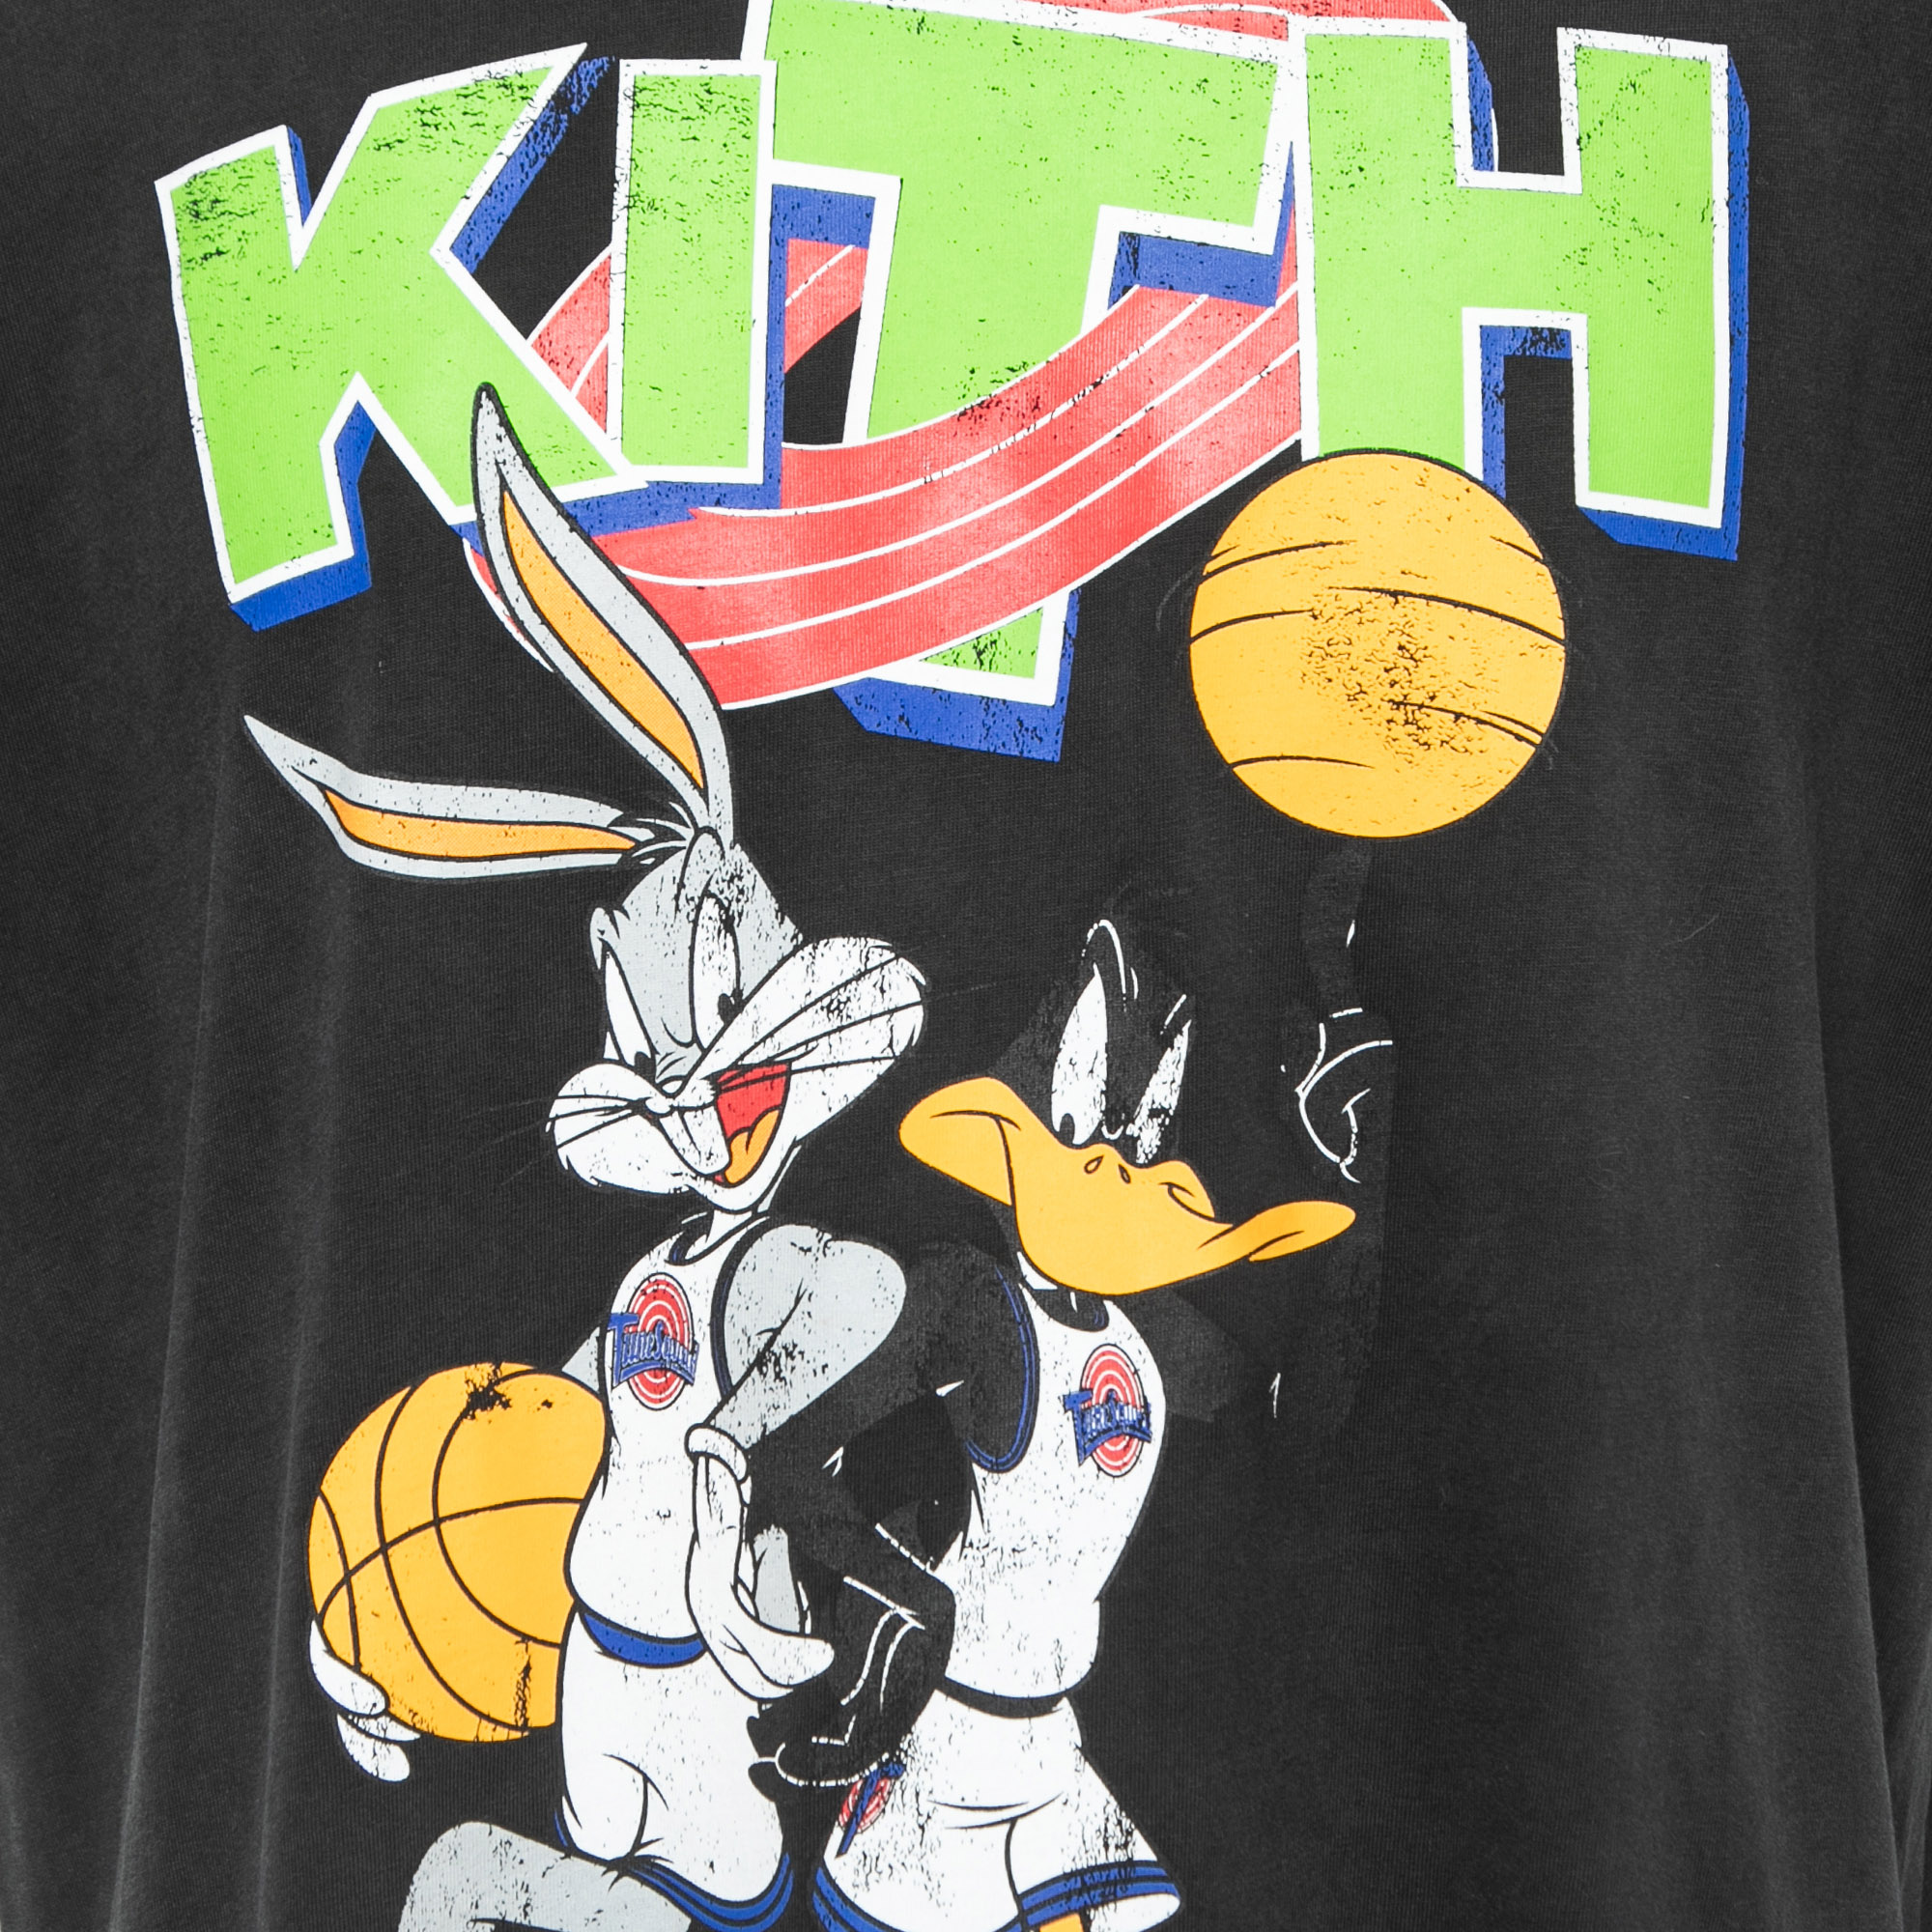 Kith X Looney Tunes Black Printed Cotton Crew Neck T-Shirt L